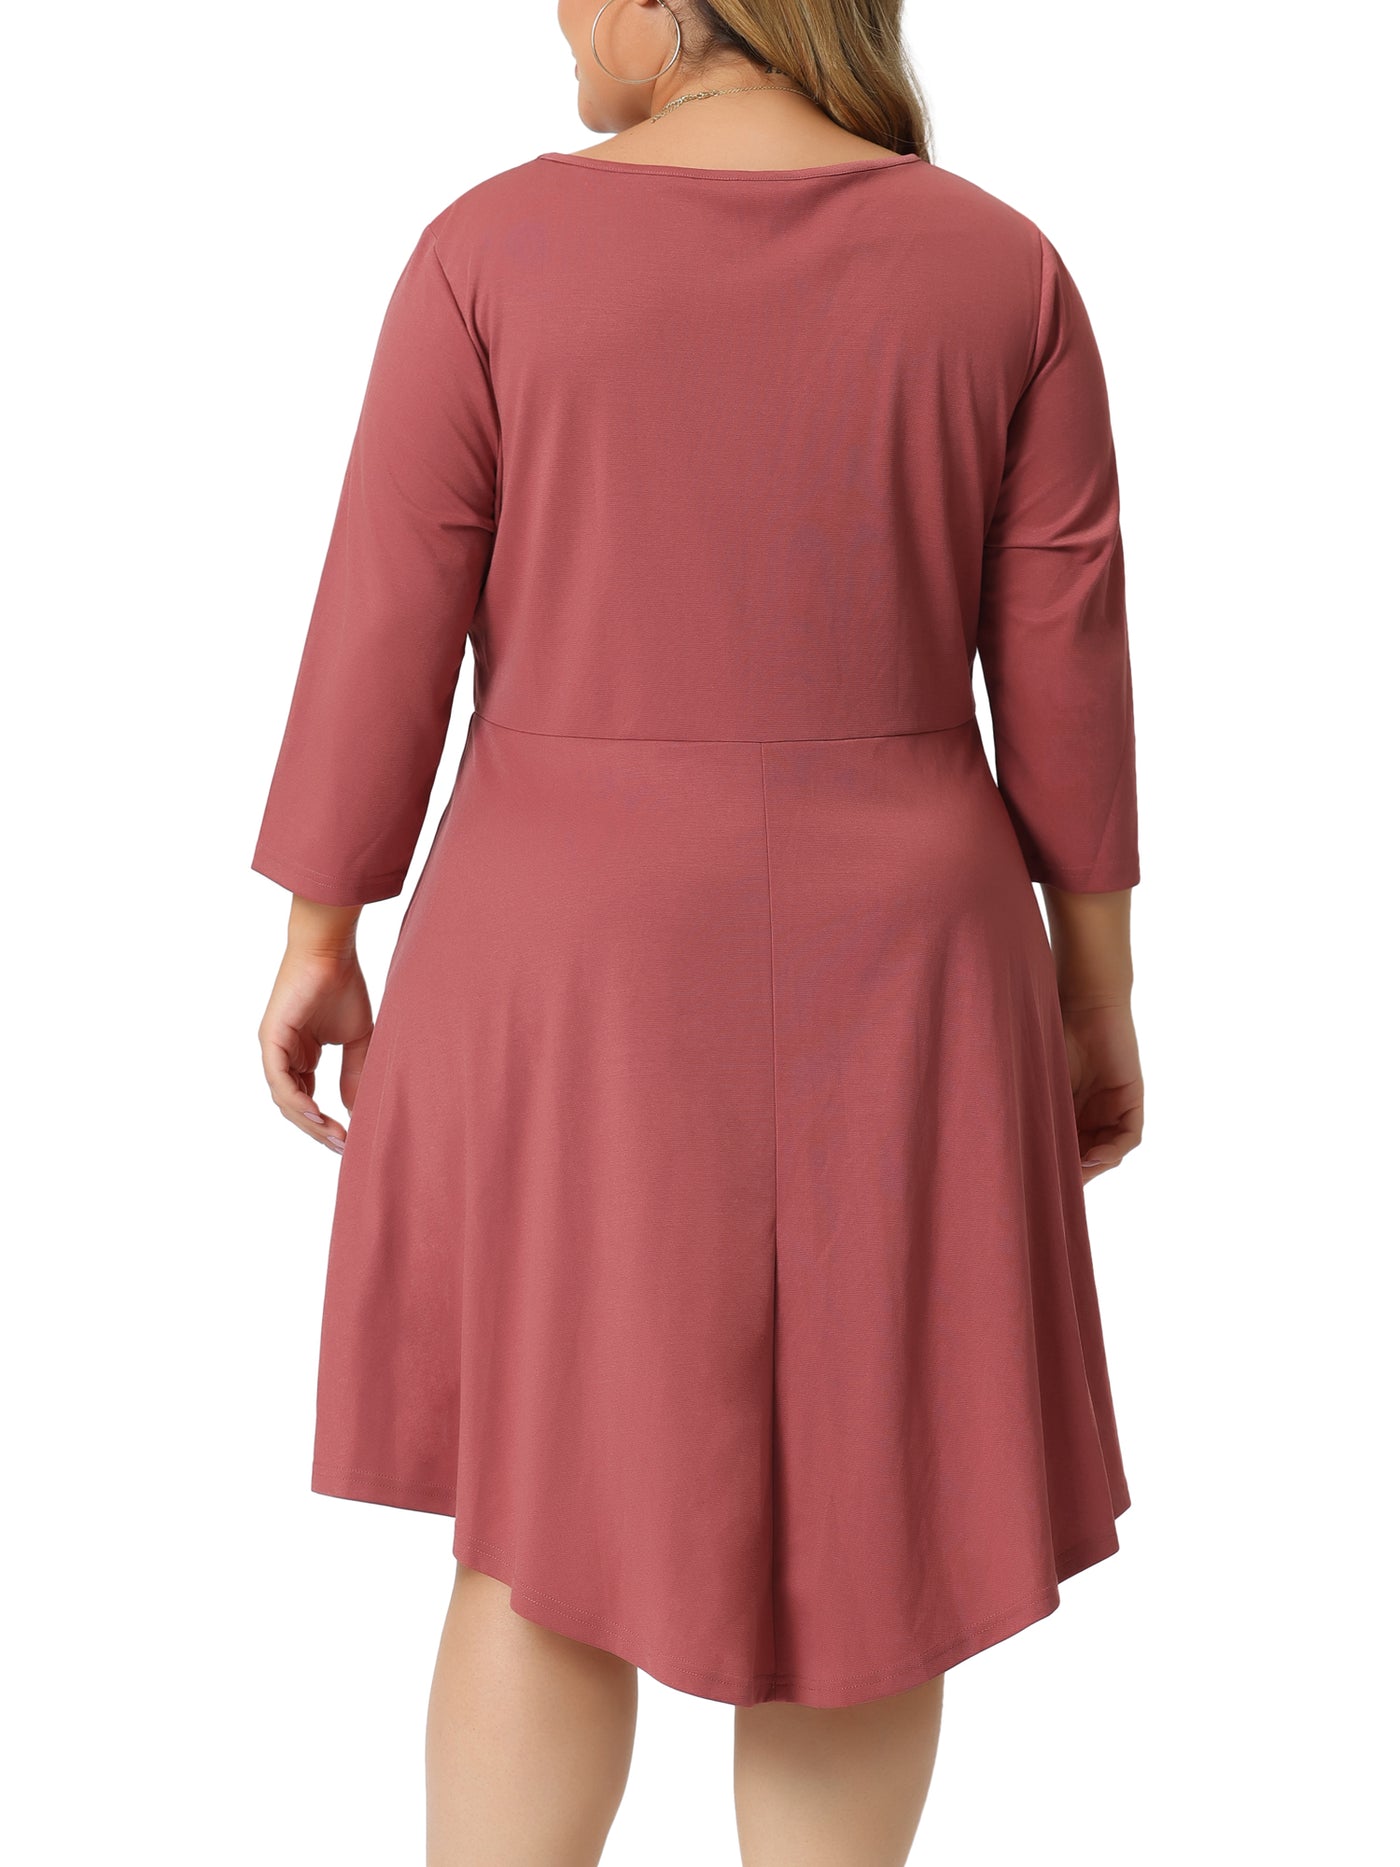 Bublédon Plus Size Midi Dress for Women V Neck 3/4 Sleeve Casual Swing Loose A-Line Dresses